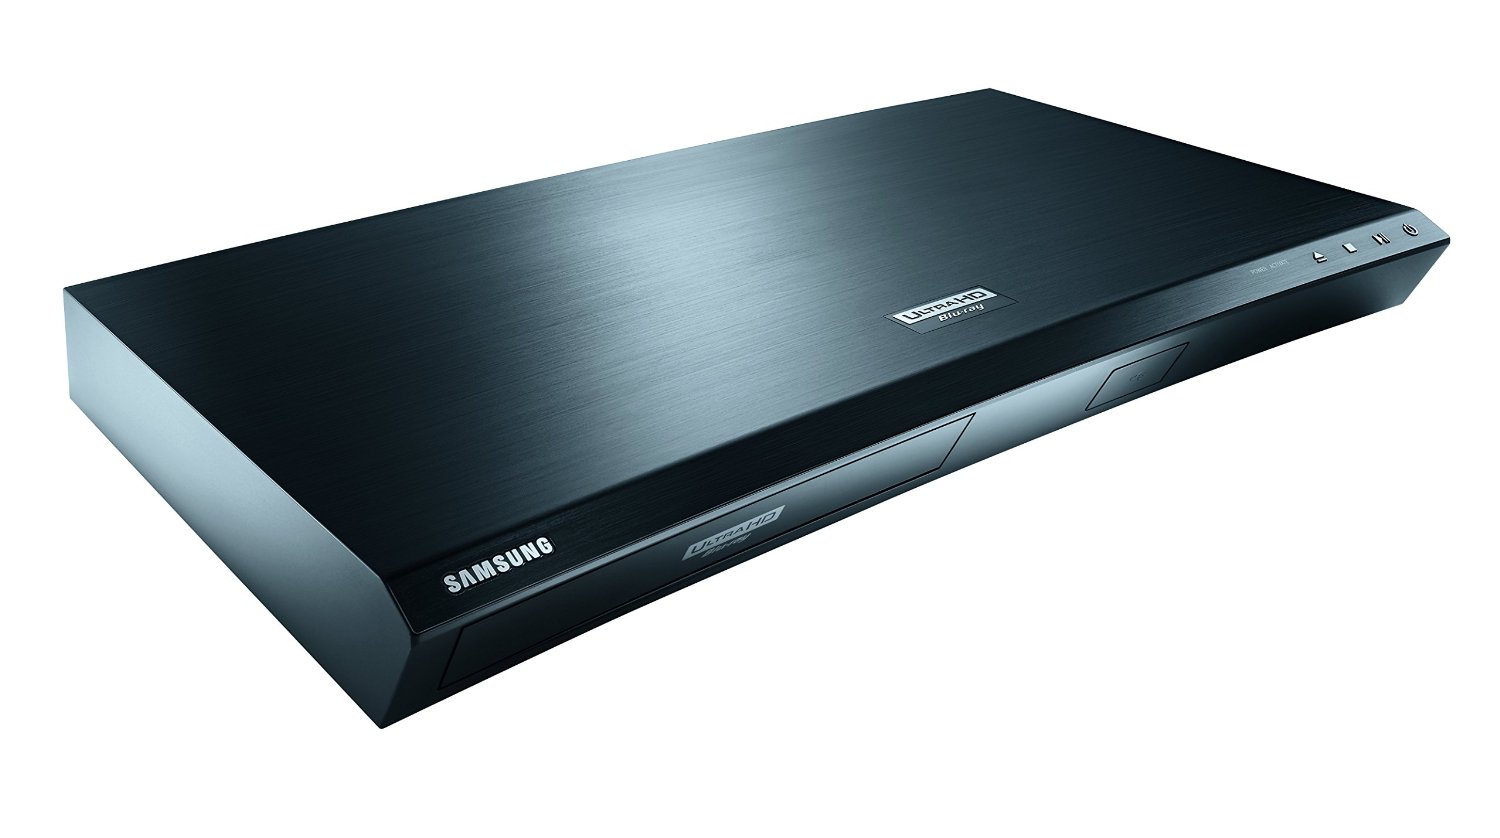 Samsung UBD-K8500 Curved Blu-ray Player - Schwarz